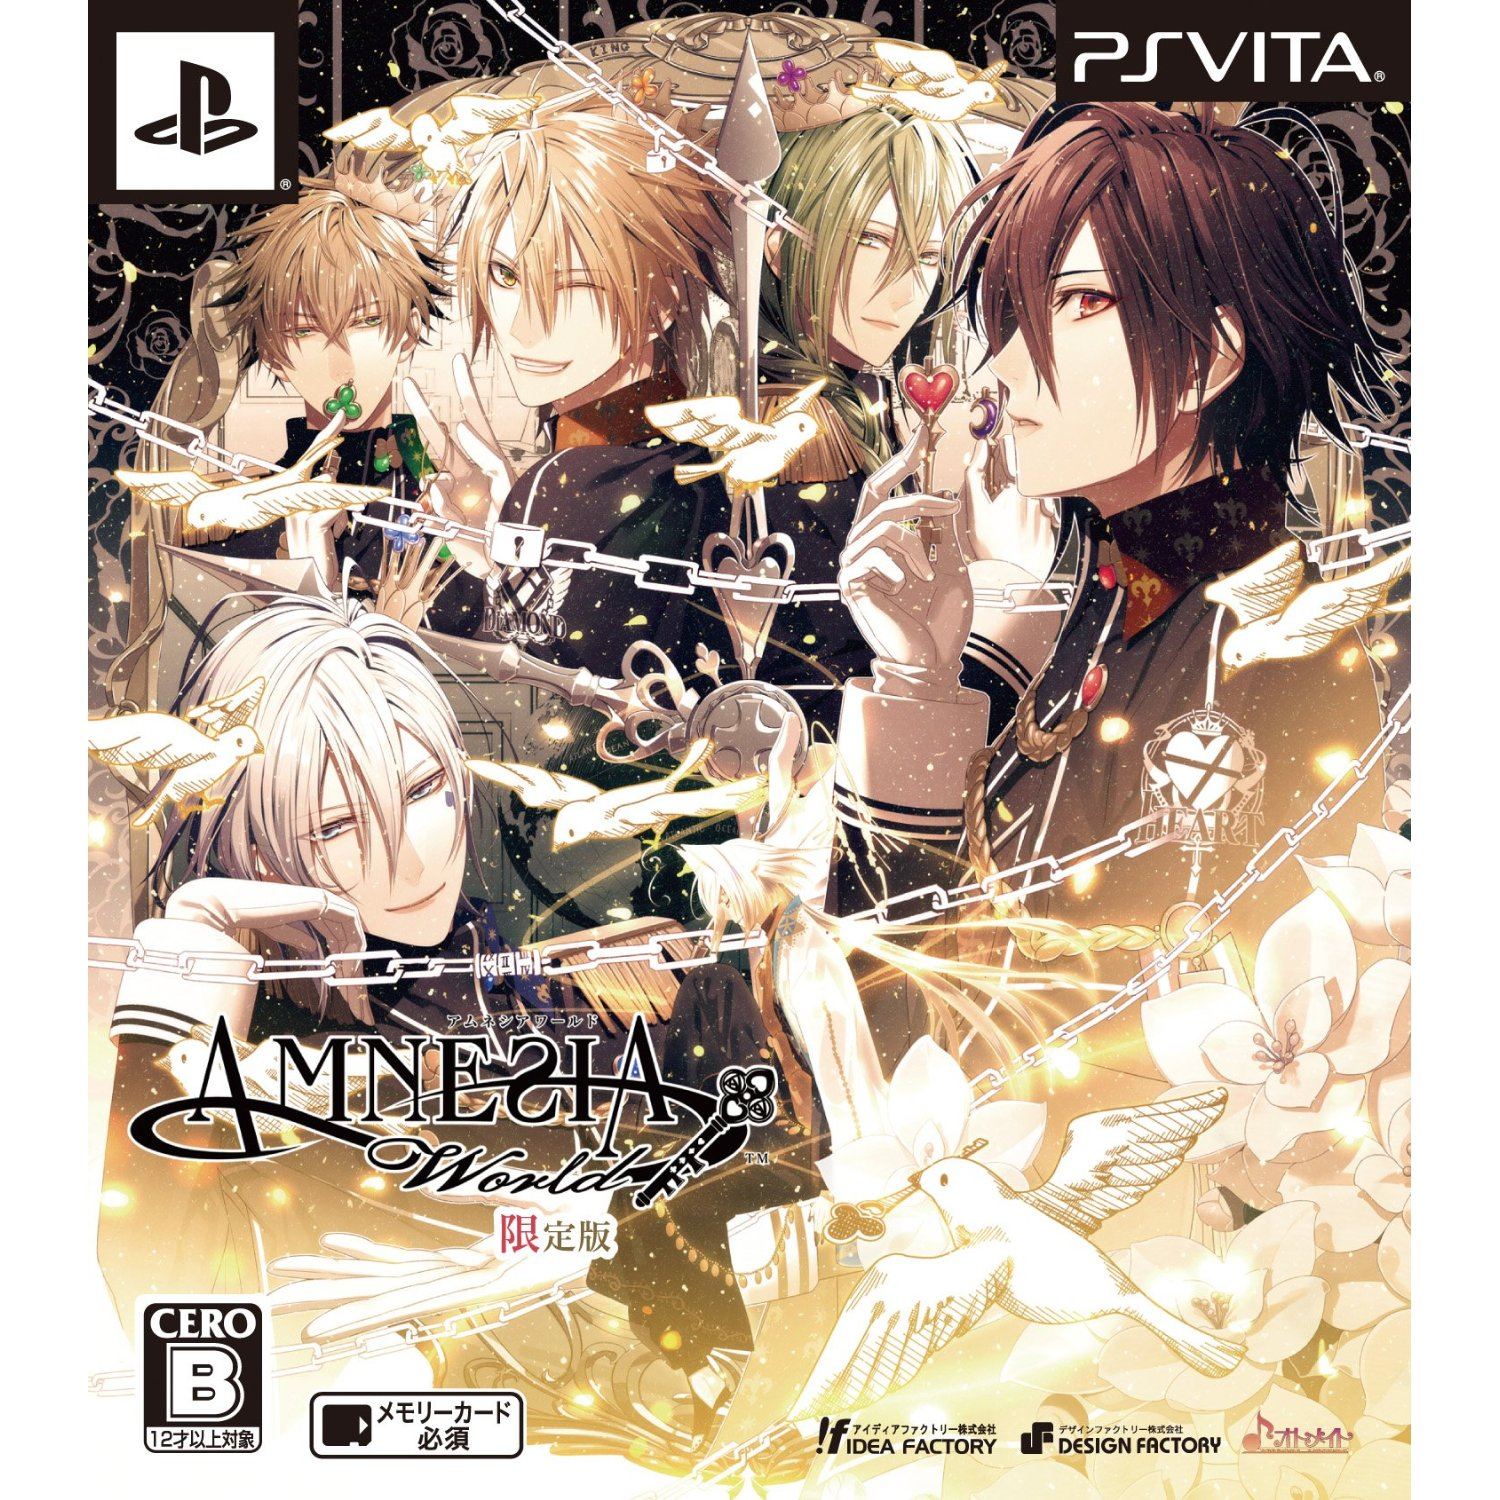 Amnesia World [Limited Edition] for PlayStation Vita